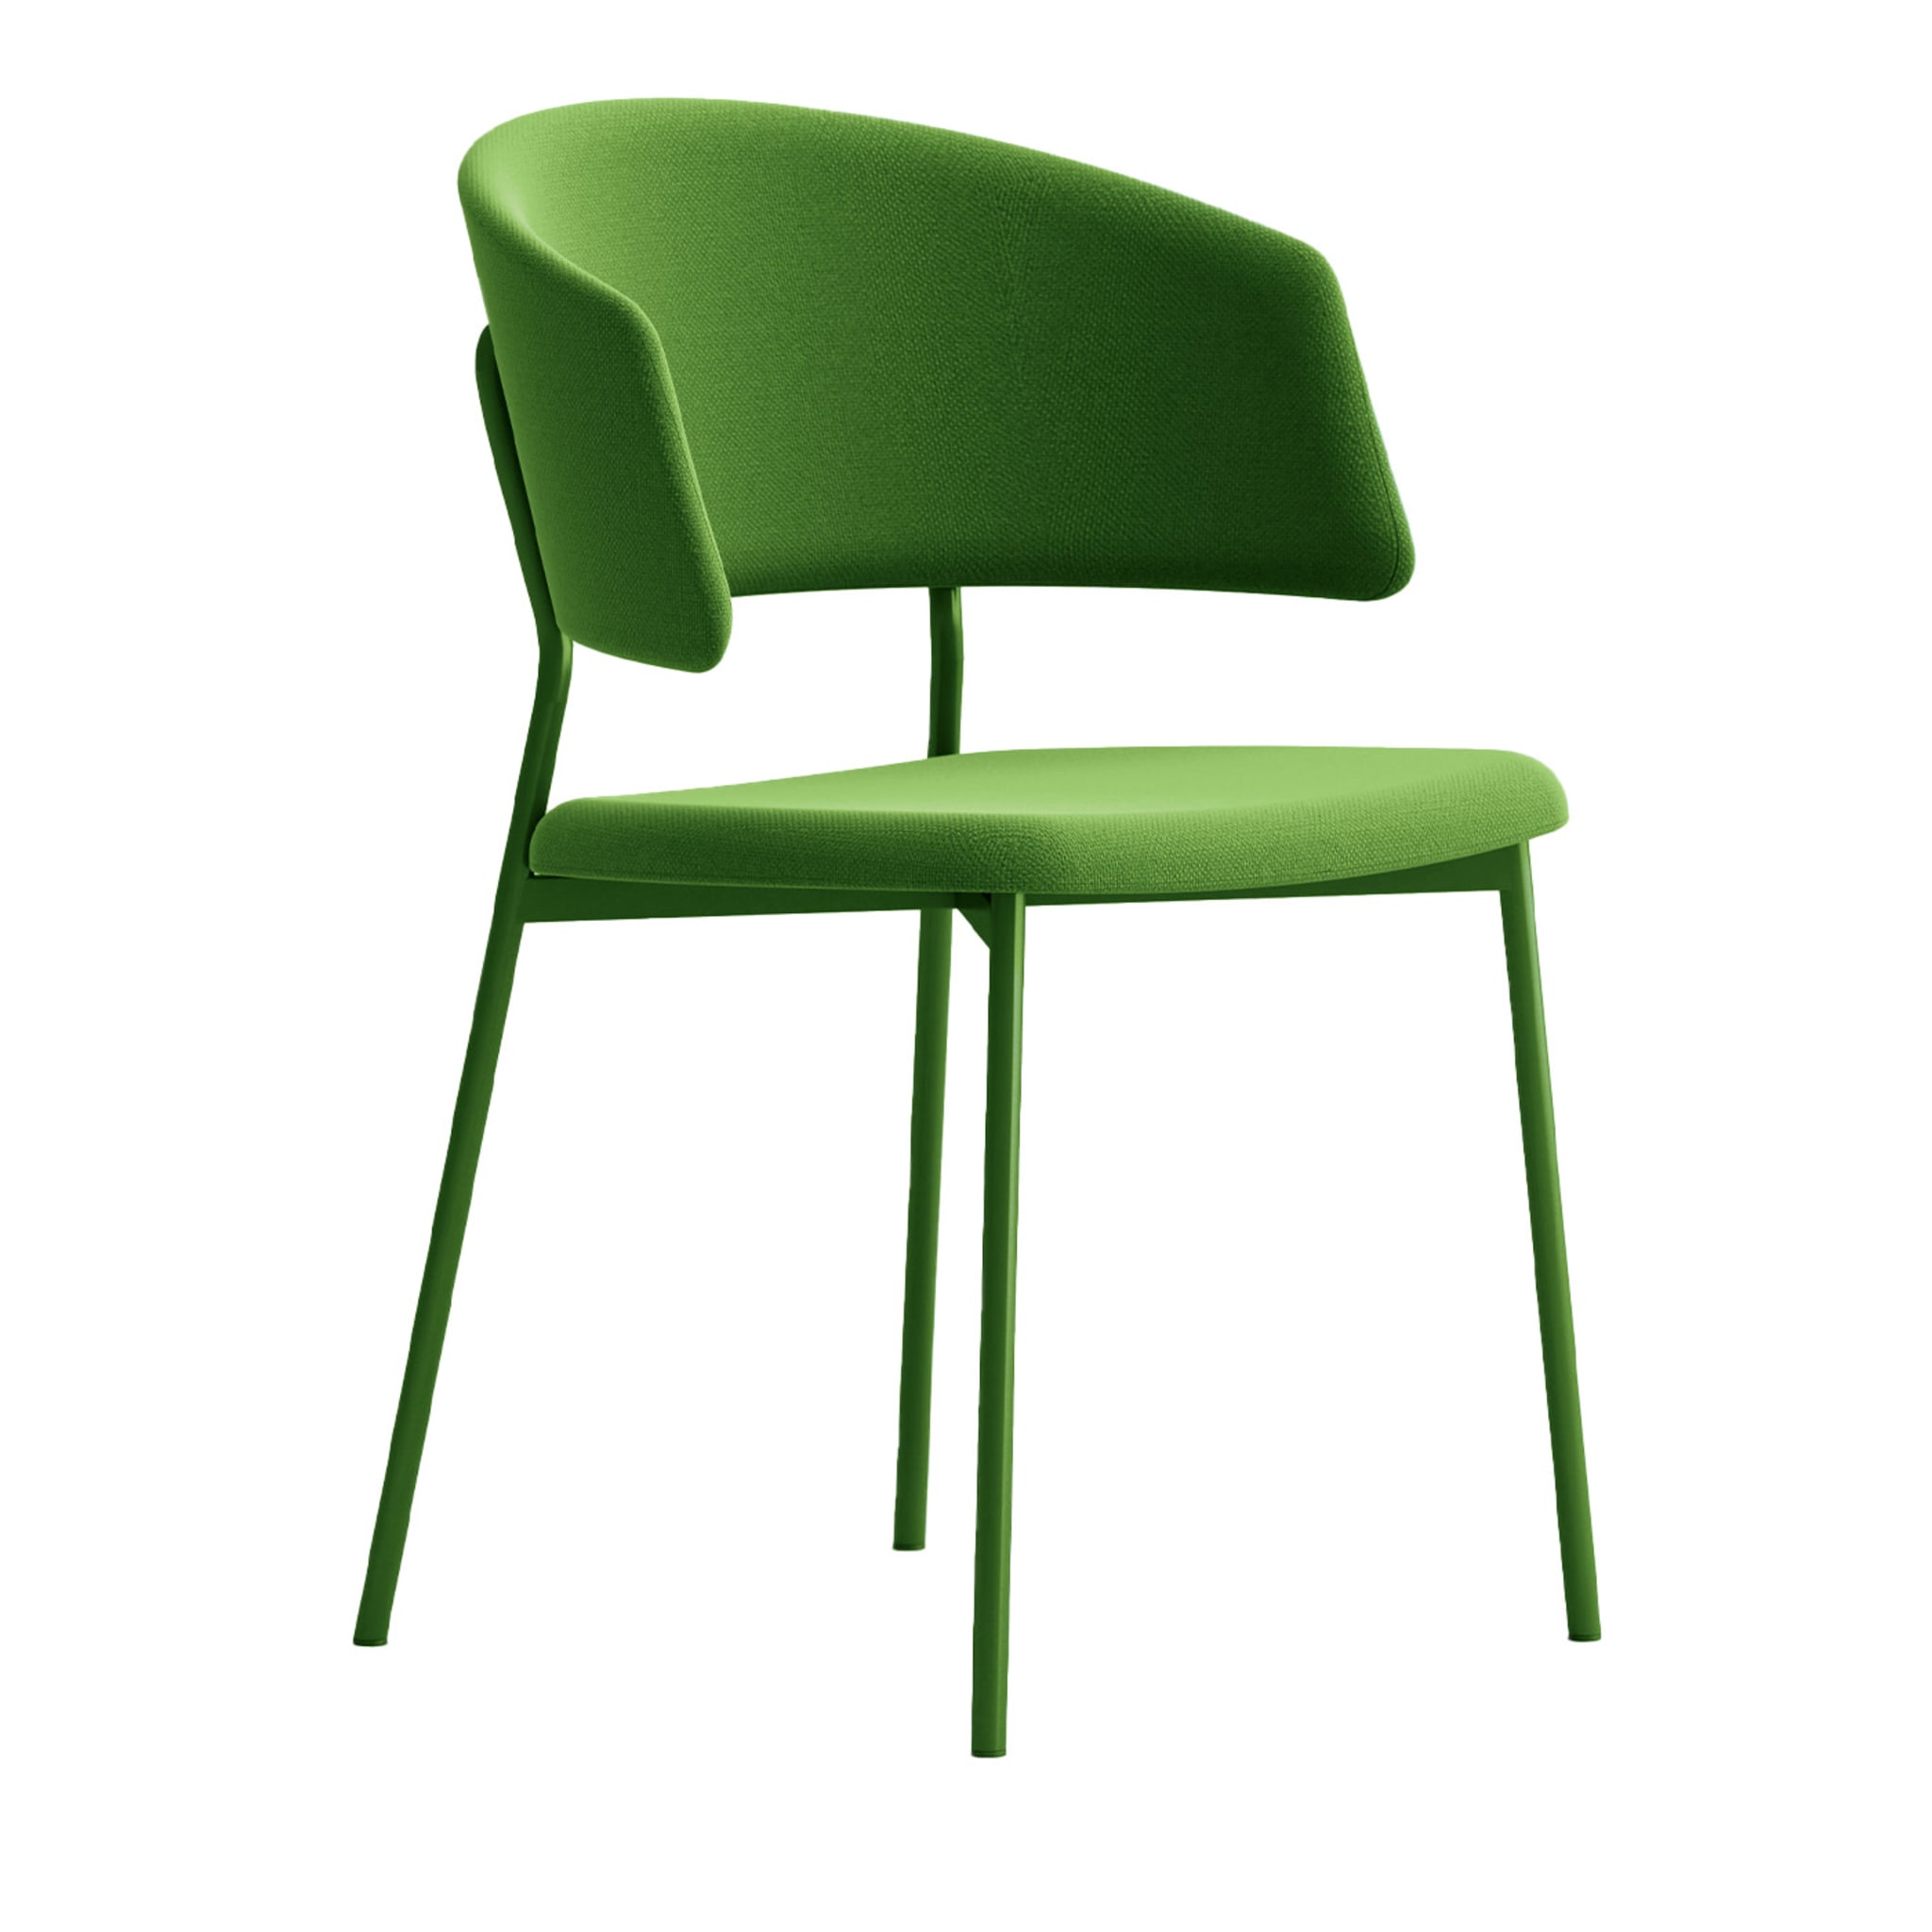 Wrap Steel Green Chair by Copiosa Lab - Main view